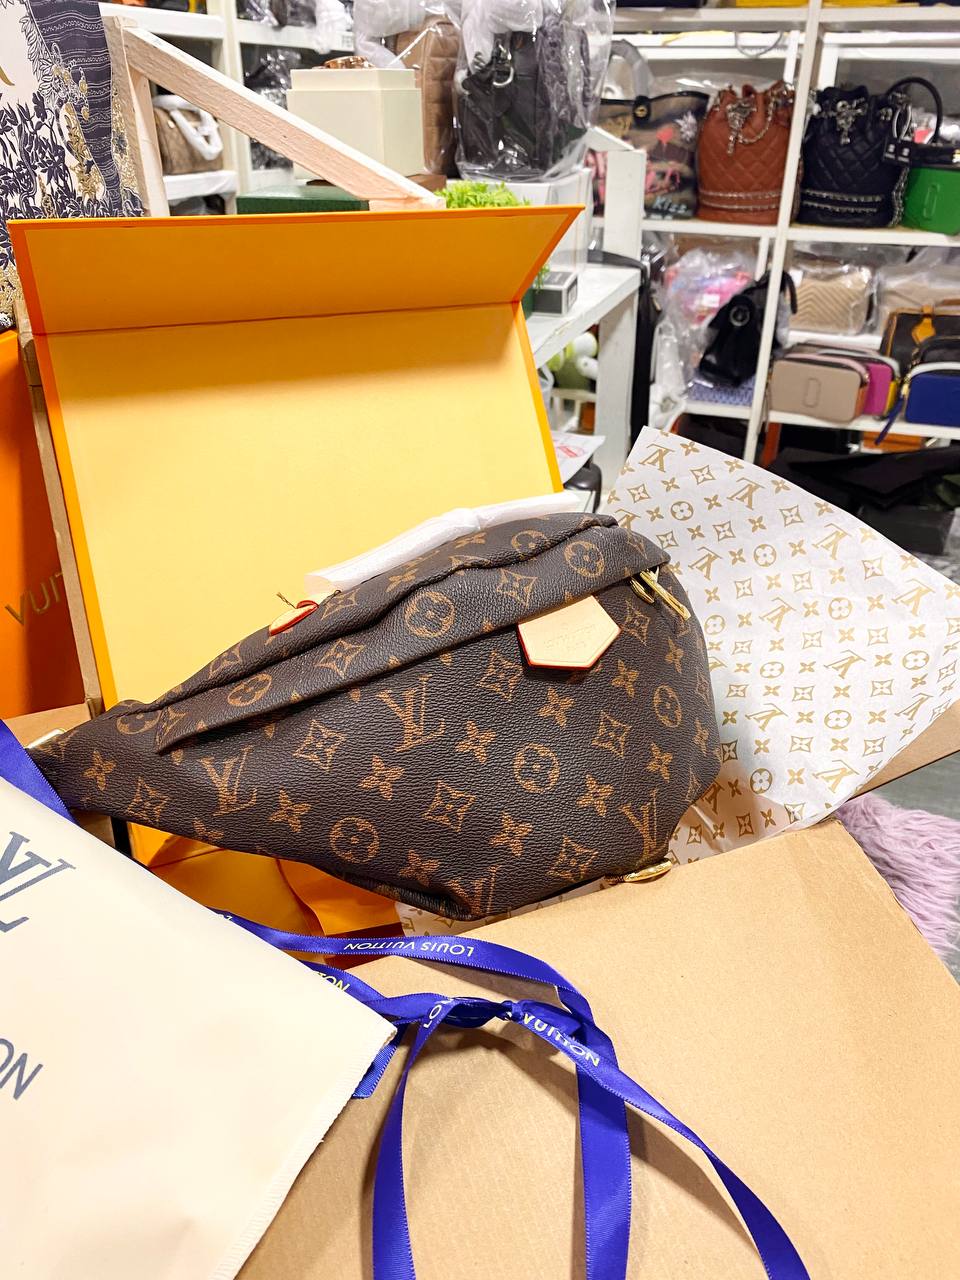 Bum Bag Louis Vuitton -  Canada